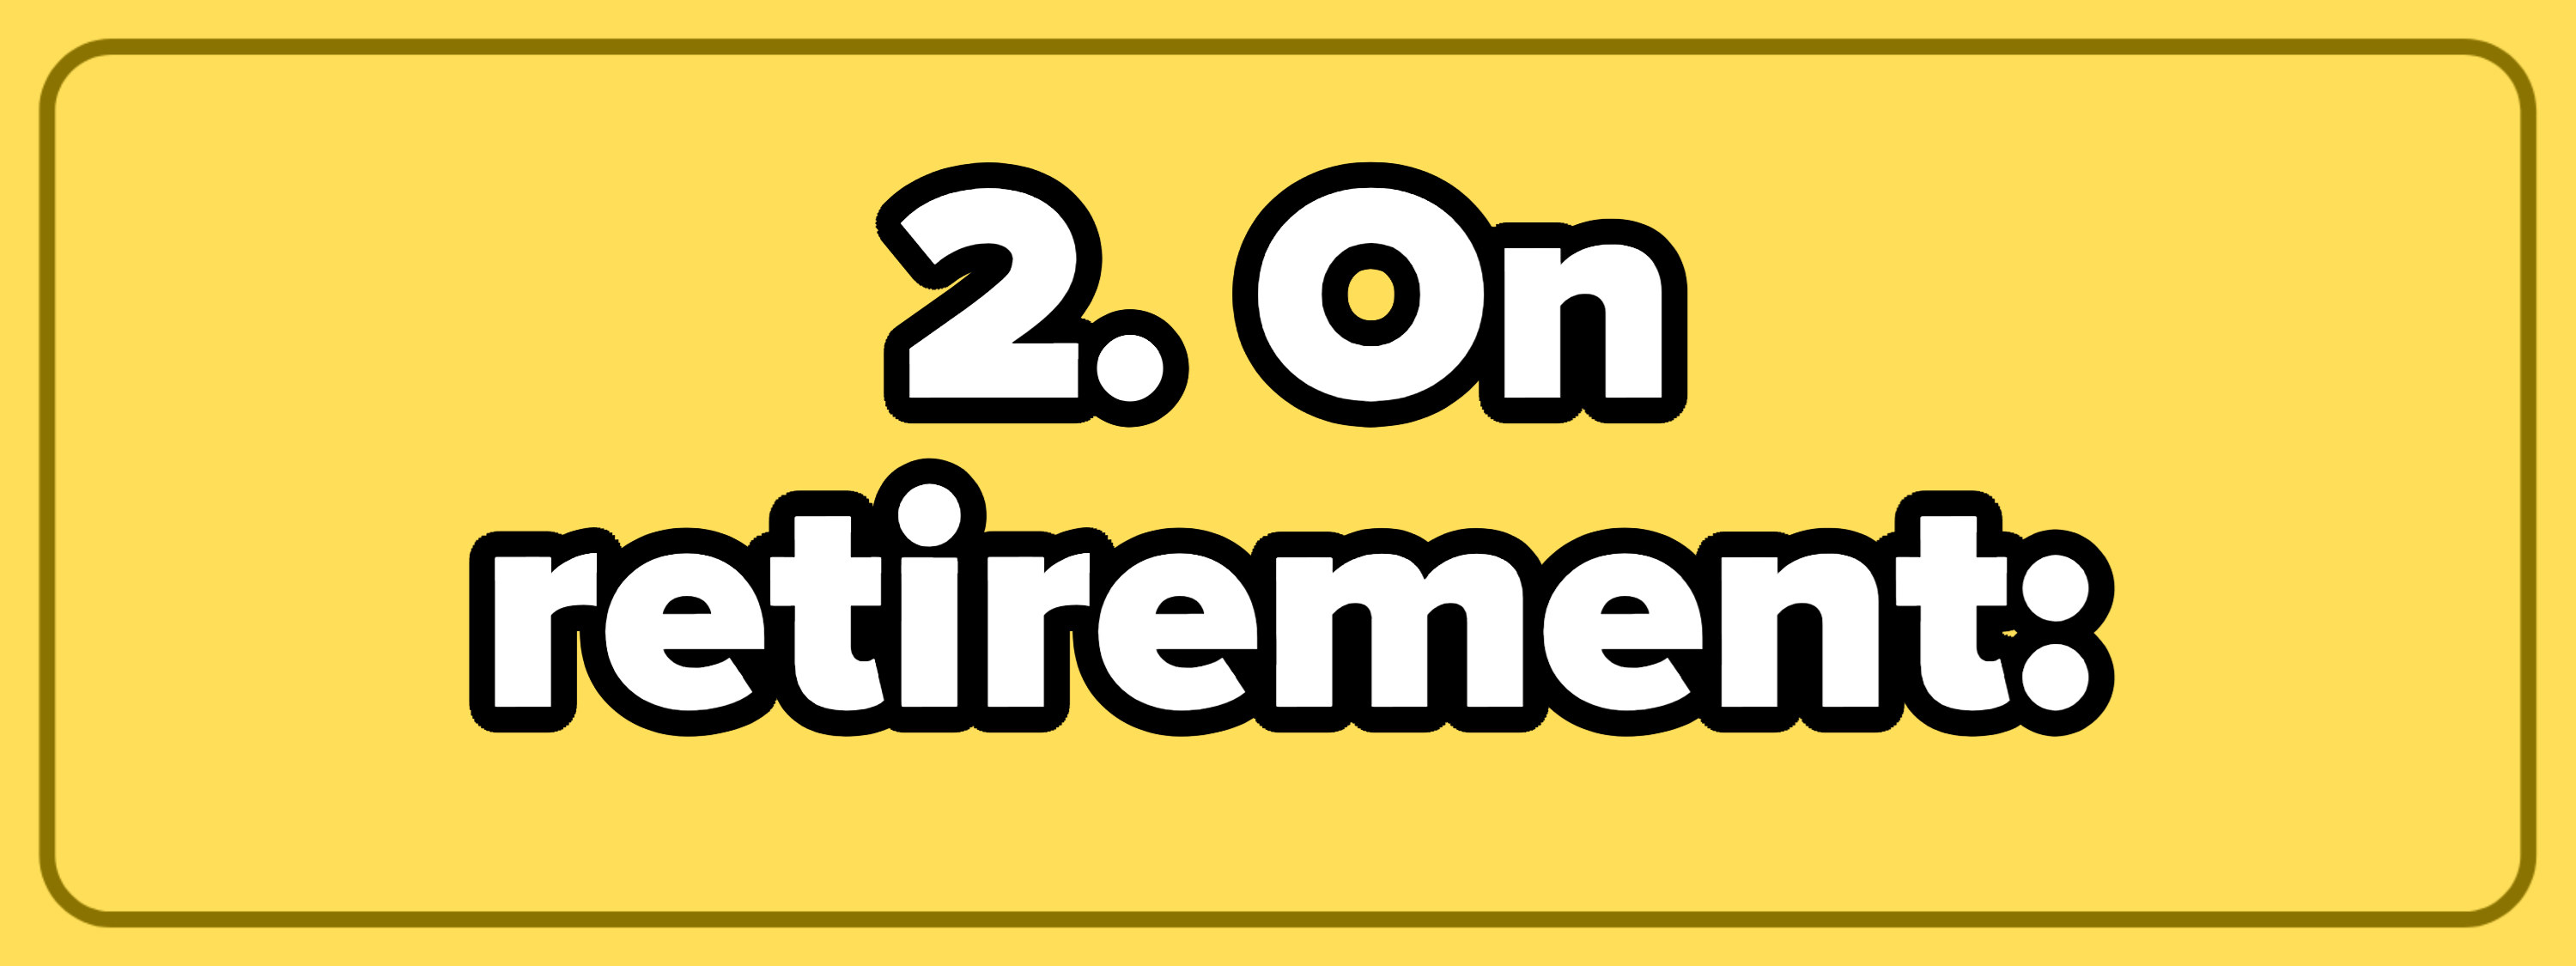 2. On retirement: